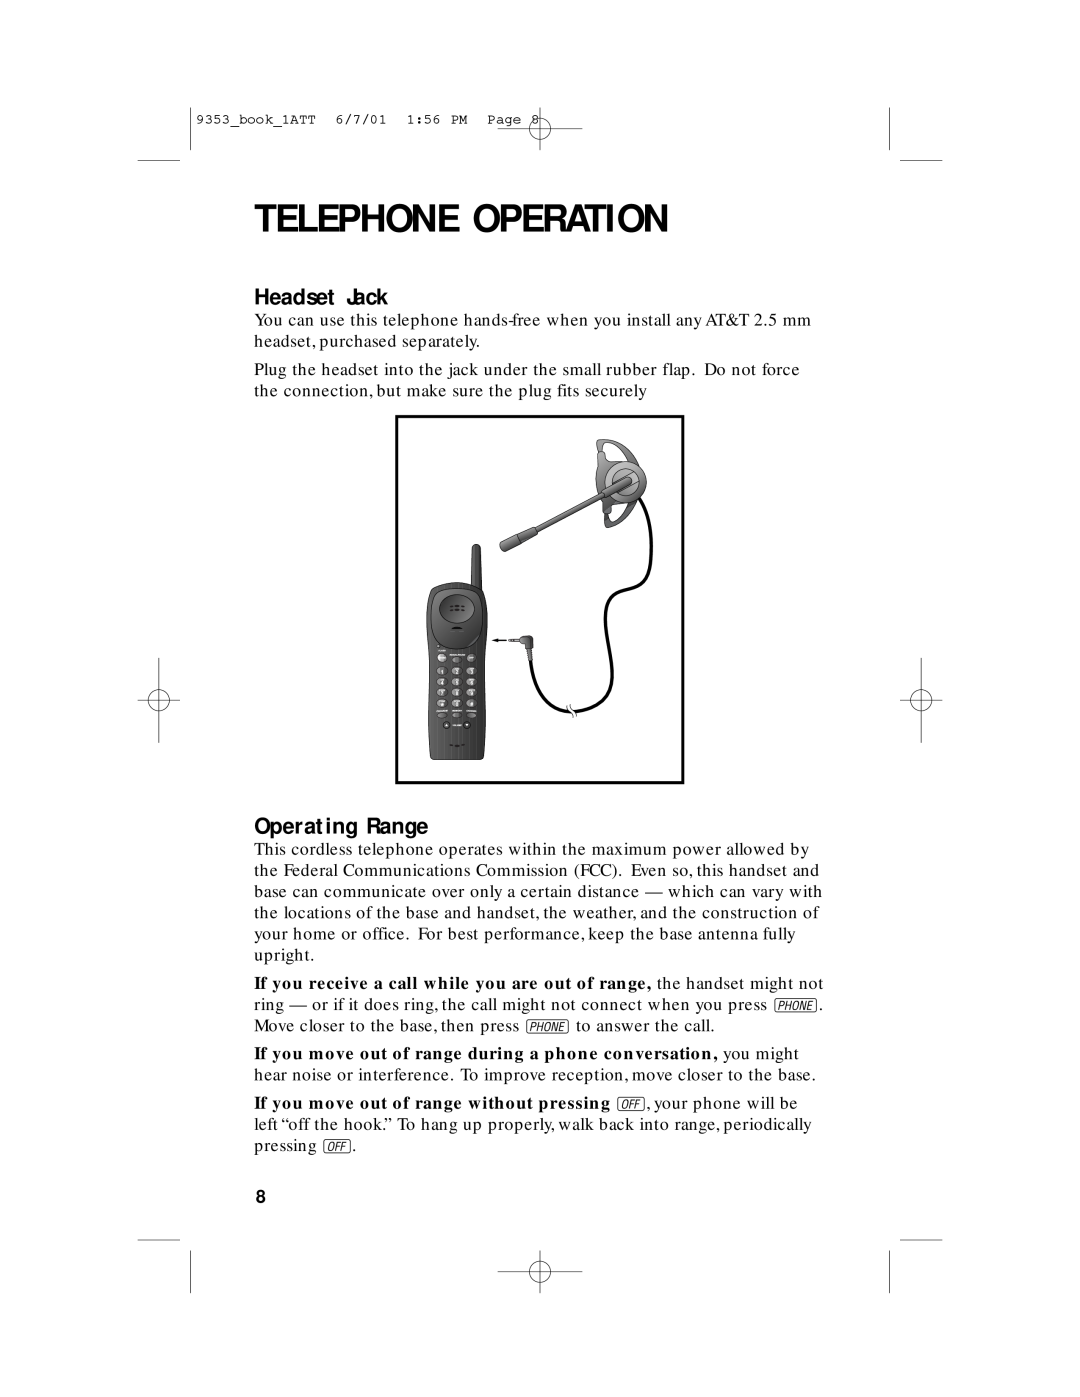 AT&T 9353 user manual Headset Jack, Operating Range, Telephone Operation 